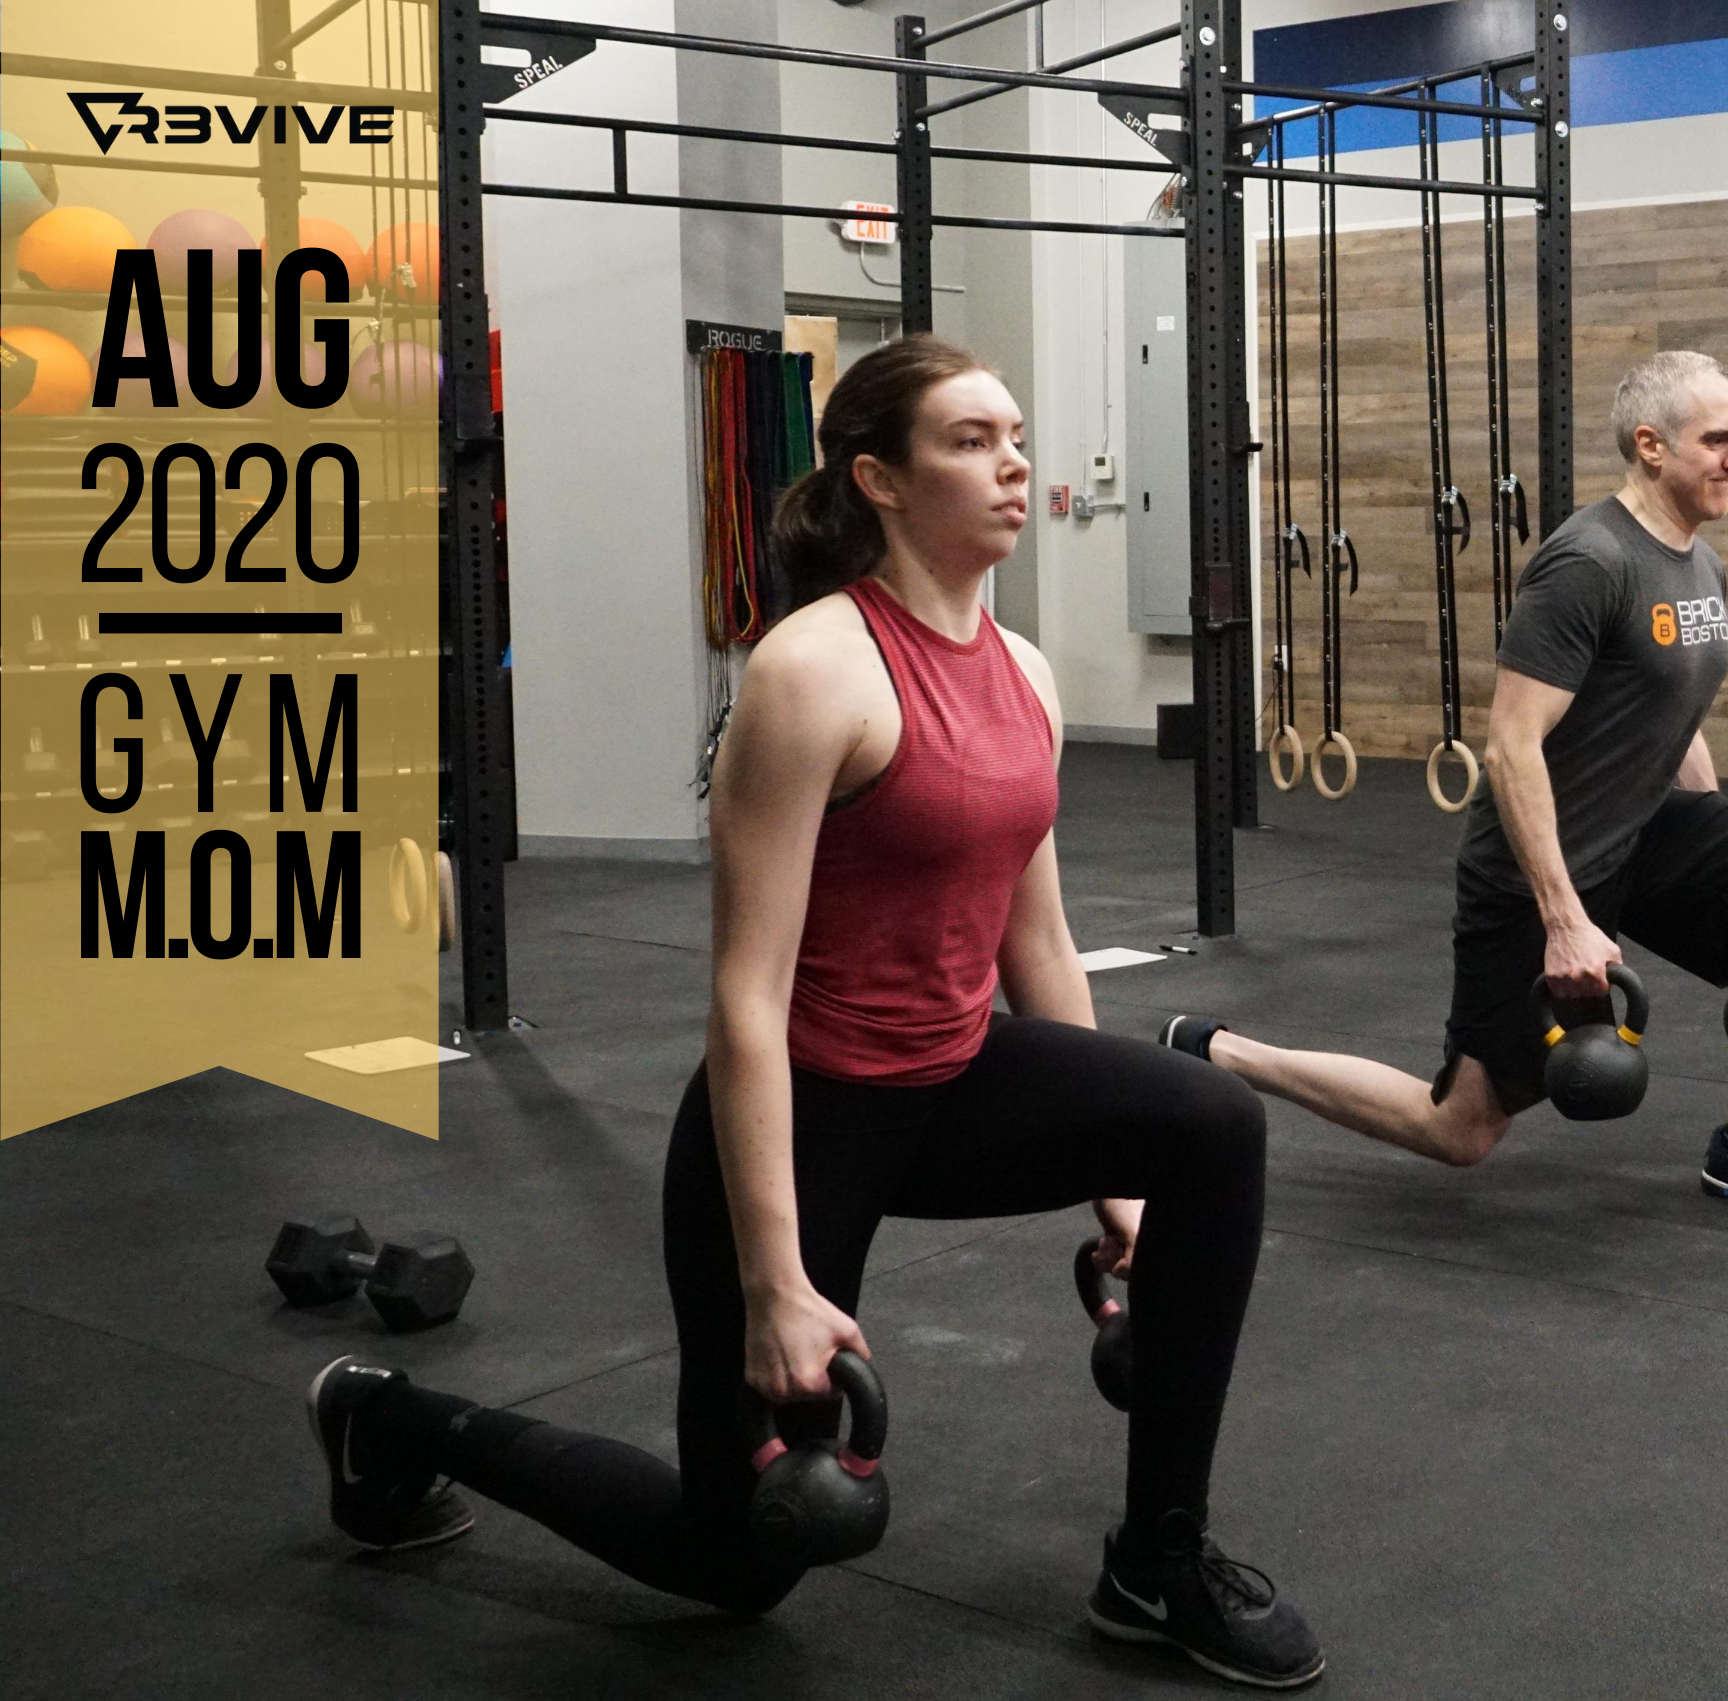 August 2020's gym mom, Amelia